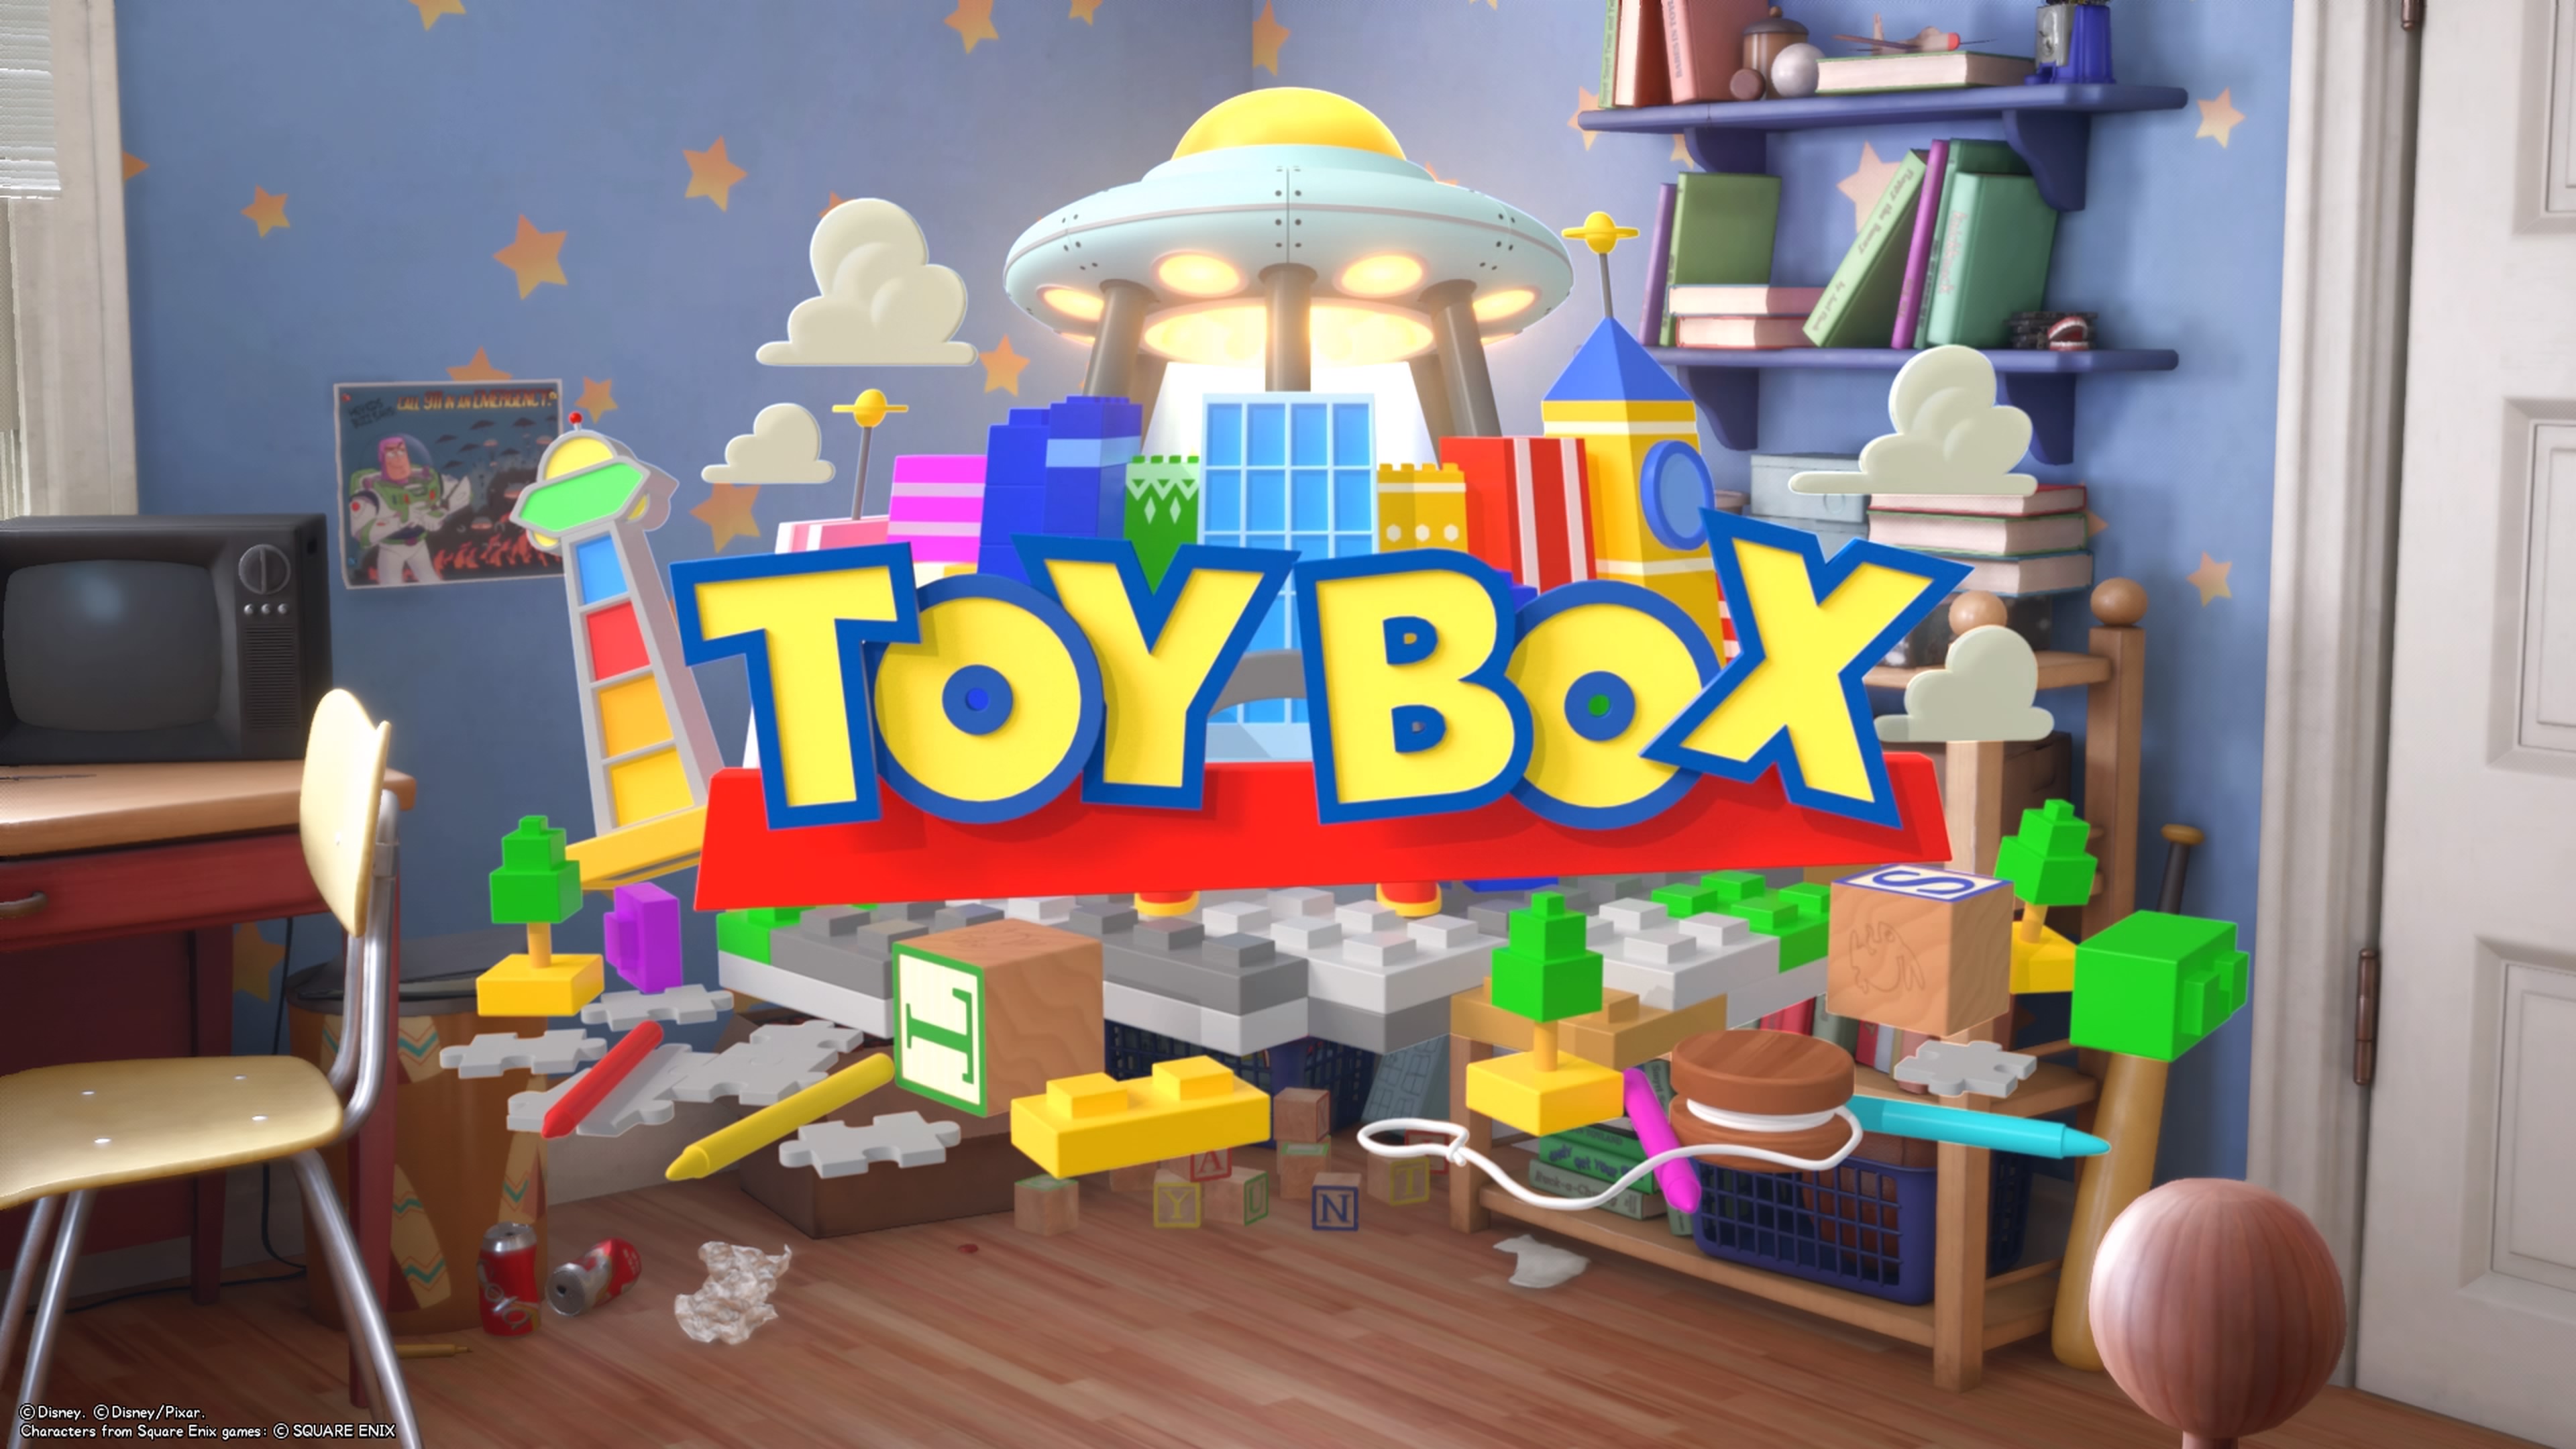 3 in the toy box. Toybox игрушки. Toy Box надпись. Kingdom Hearts III Toys Box. Toy-Box группа.